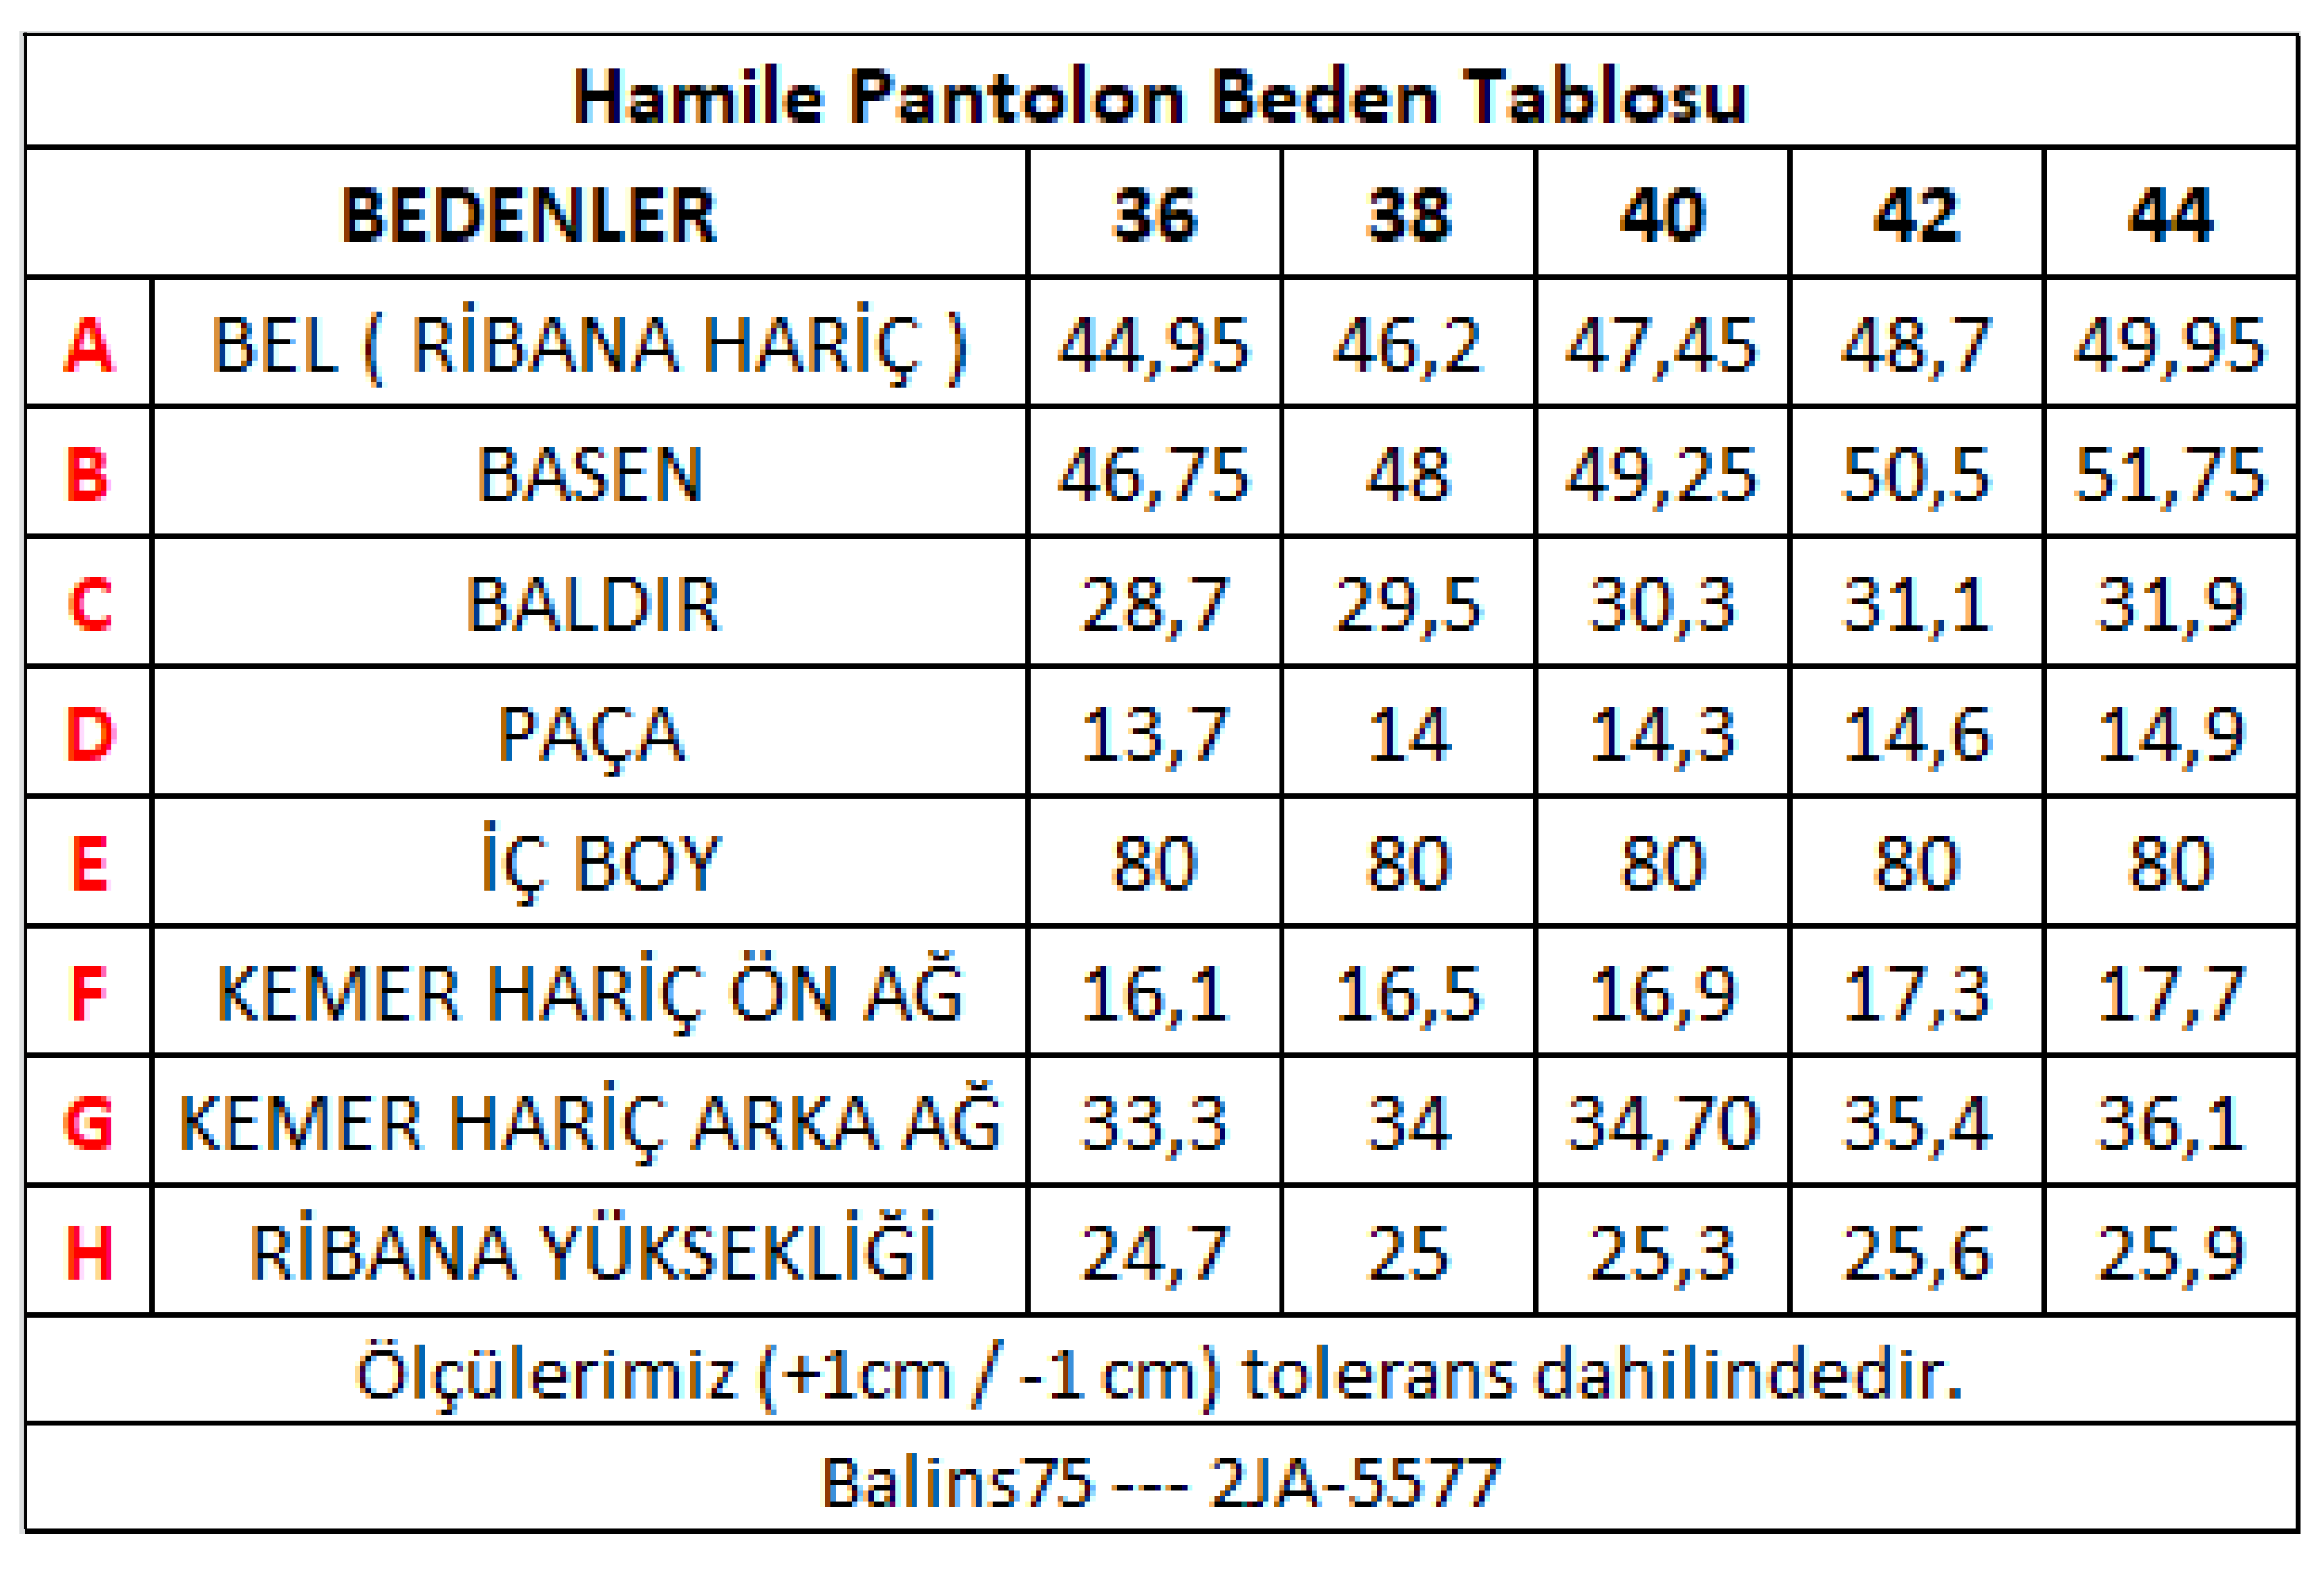 balins-75.png (73 KB)